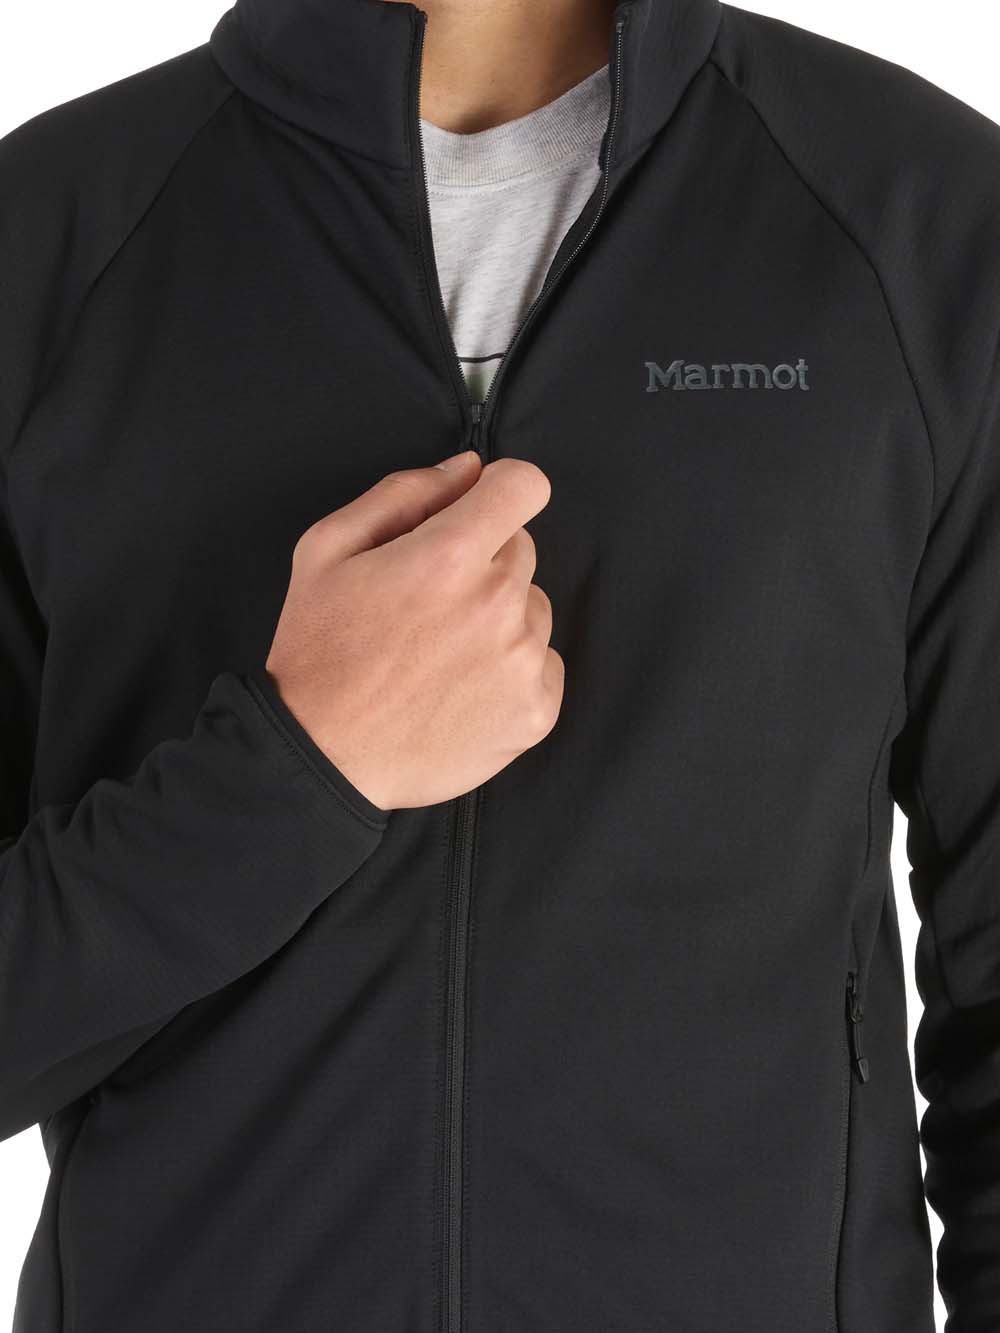 Marmot Men's Stretch Fleece Jacket